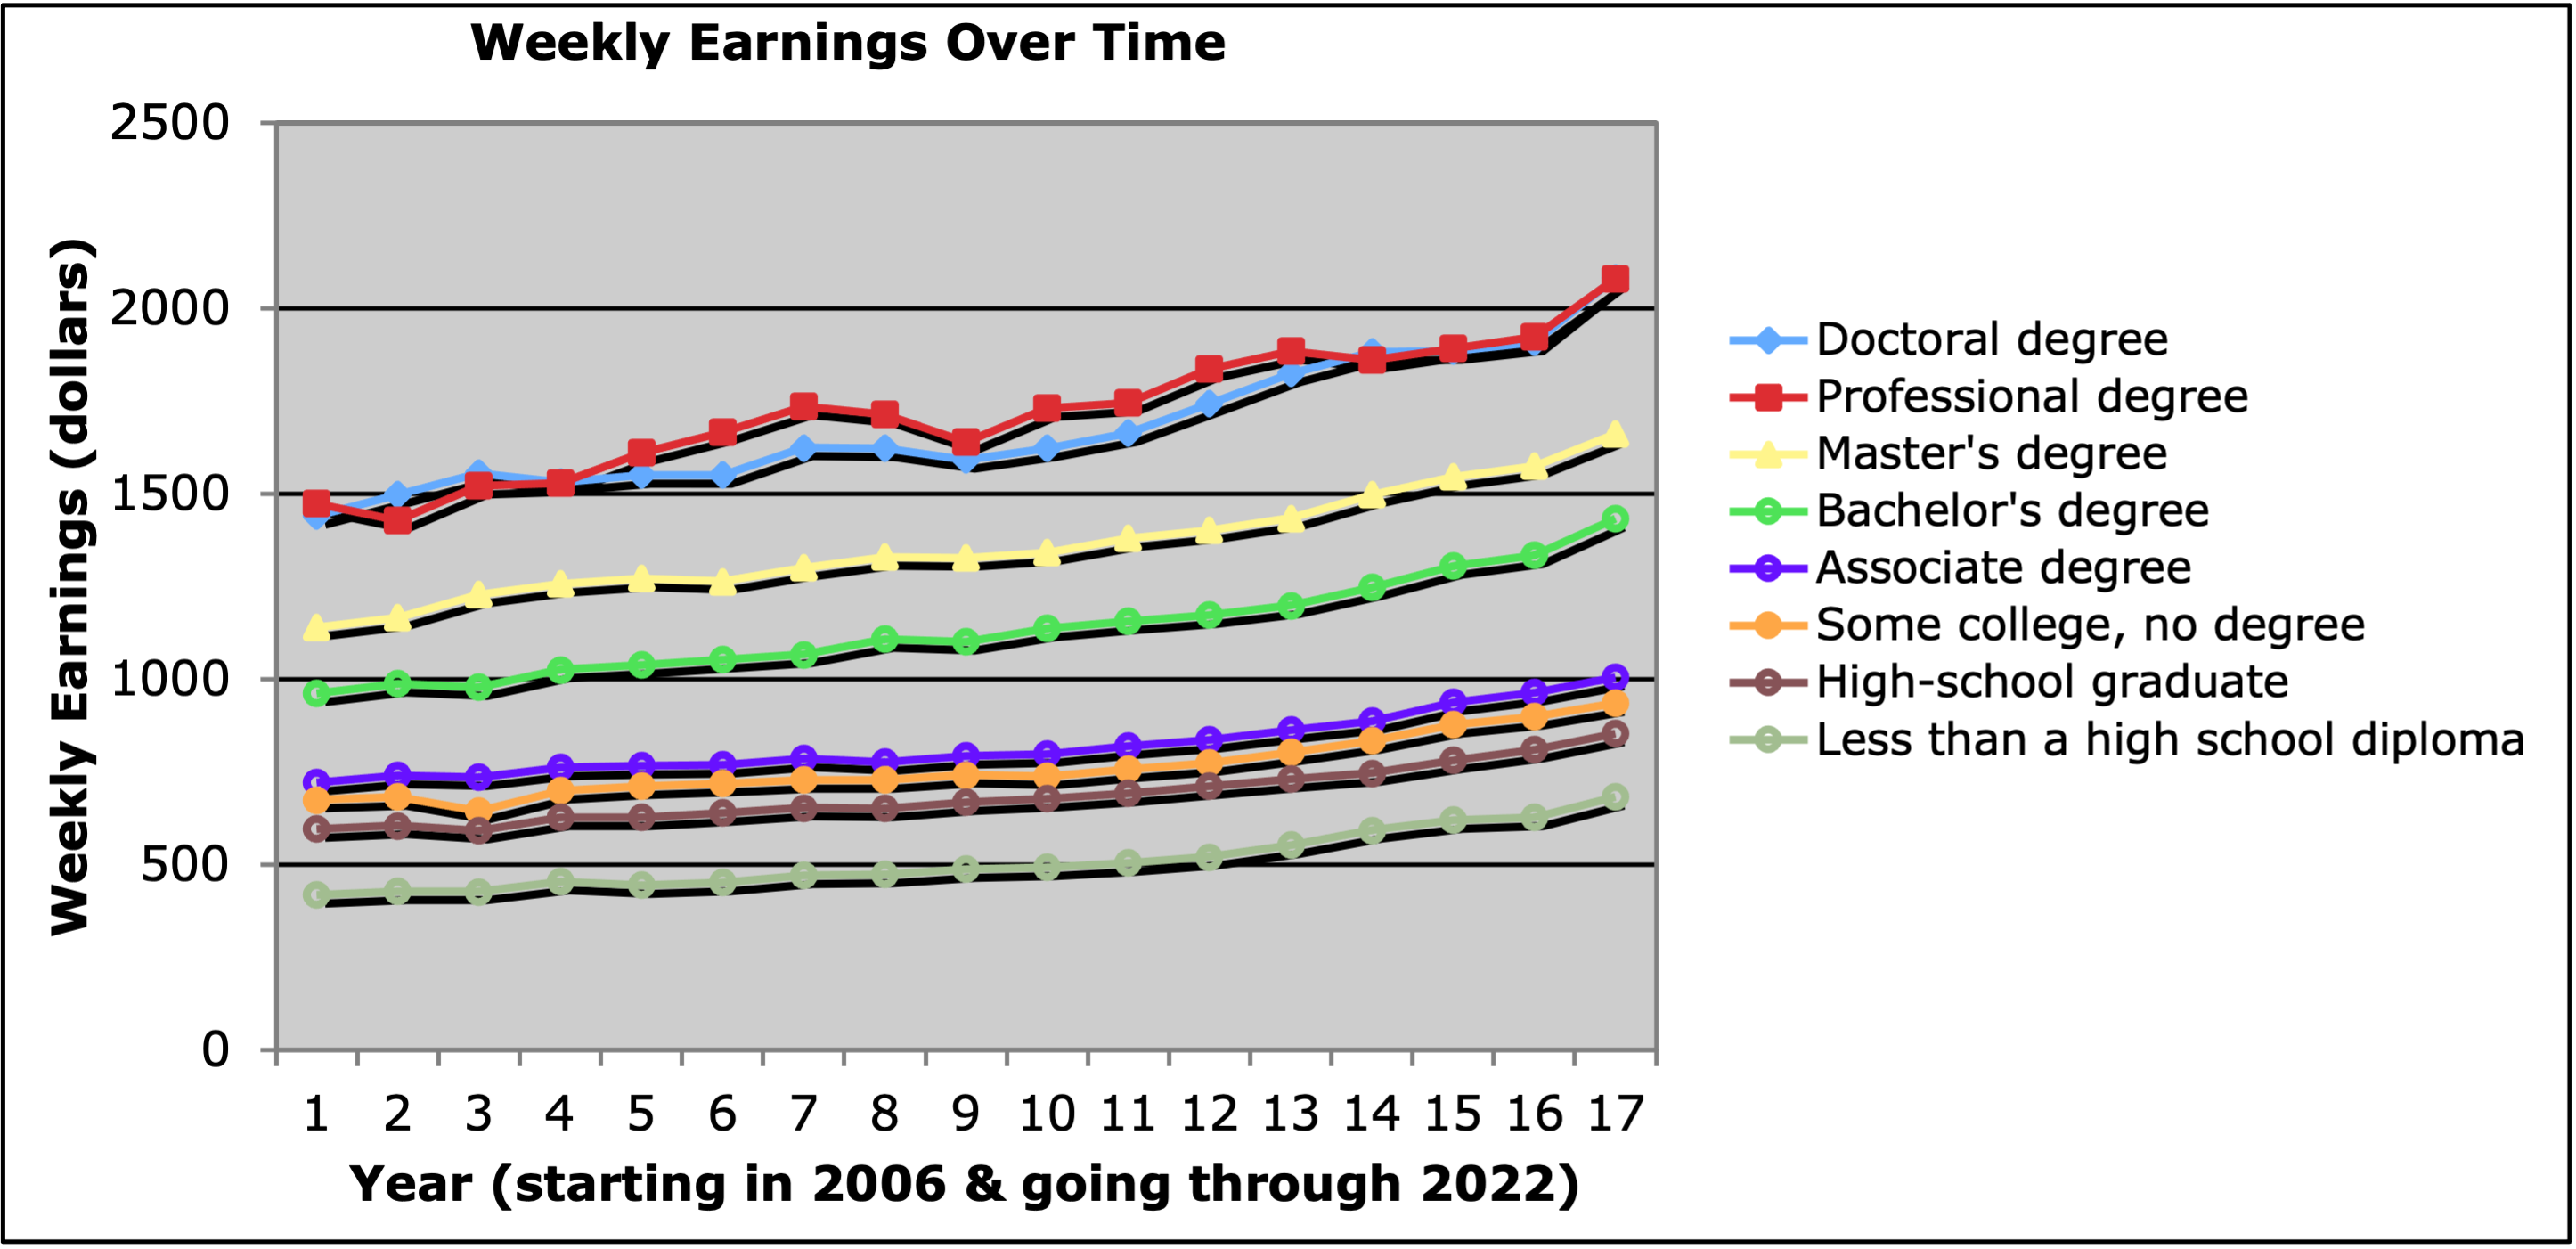 Weekly earnings over time